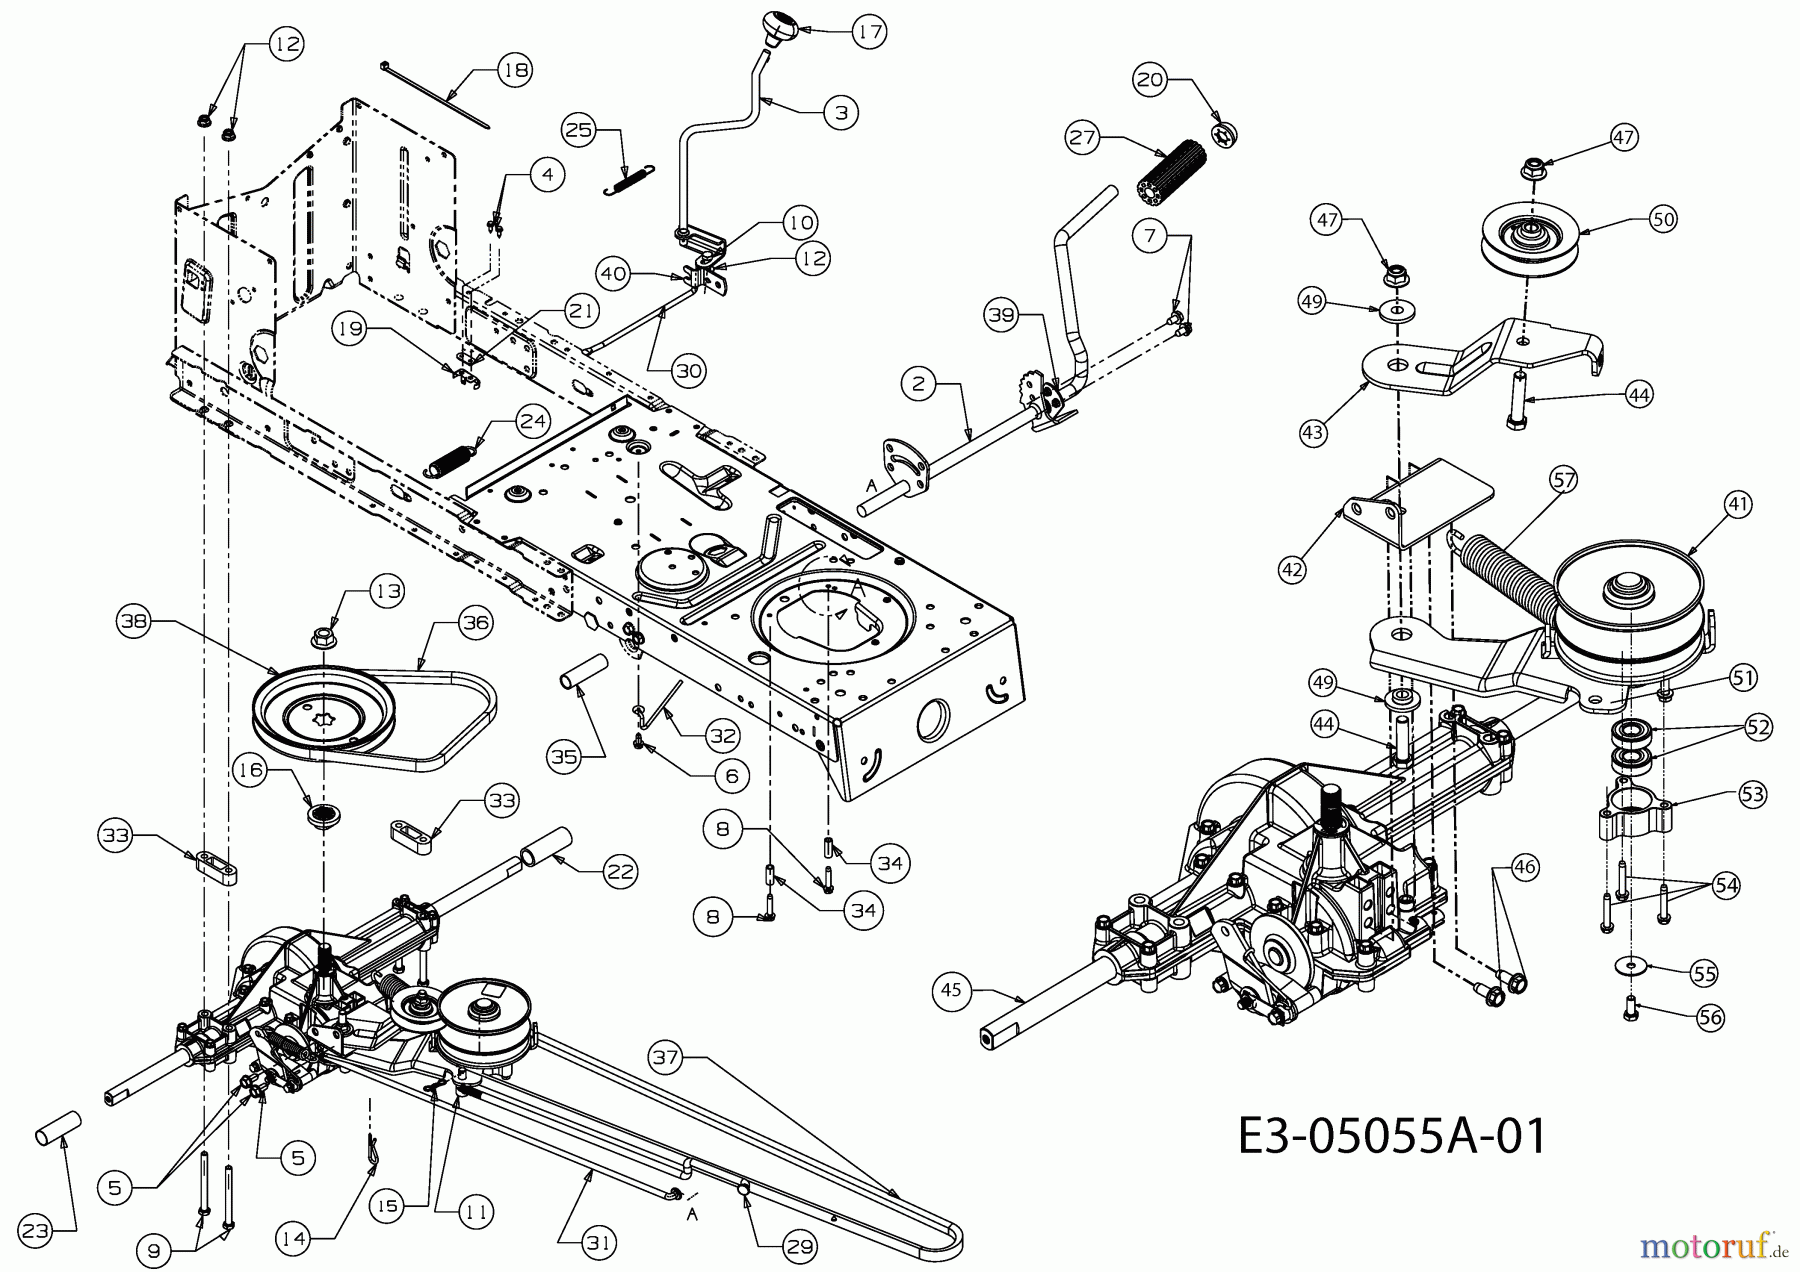  MTD Lawn tractors RS 125/96 B 13AH761F600  (2010) Drive system, Pedals